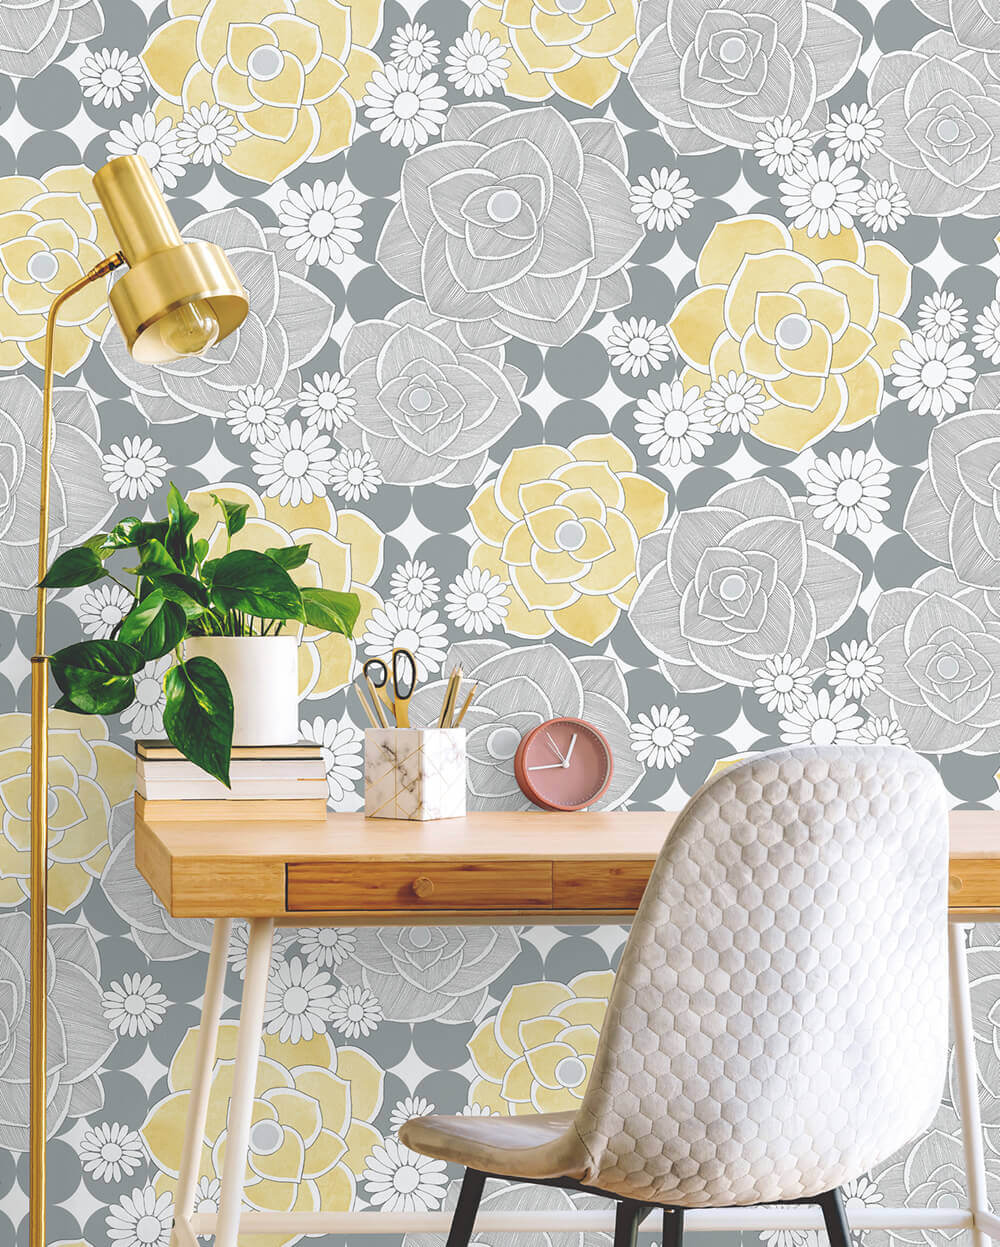 NextWall Retro Floral Peel & Stick Wallpaper - Yellow & Gray